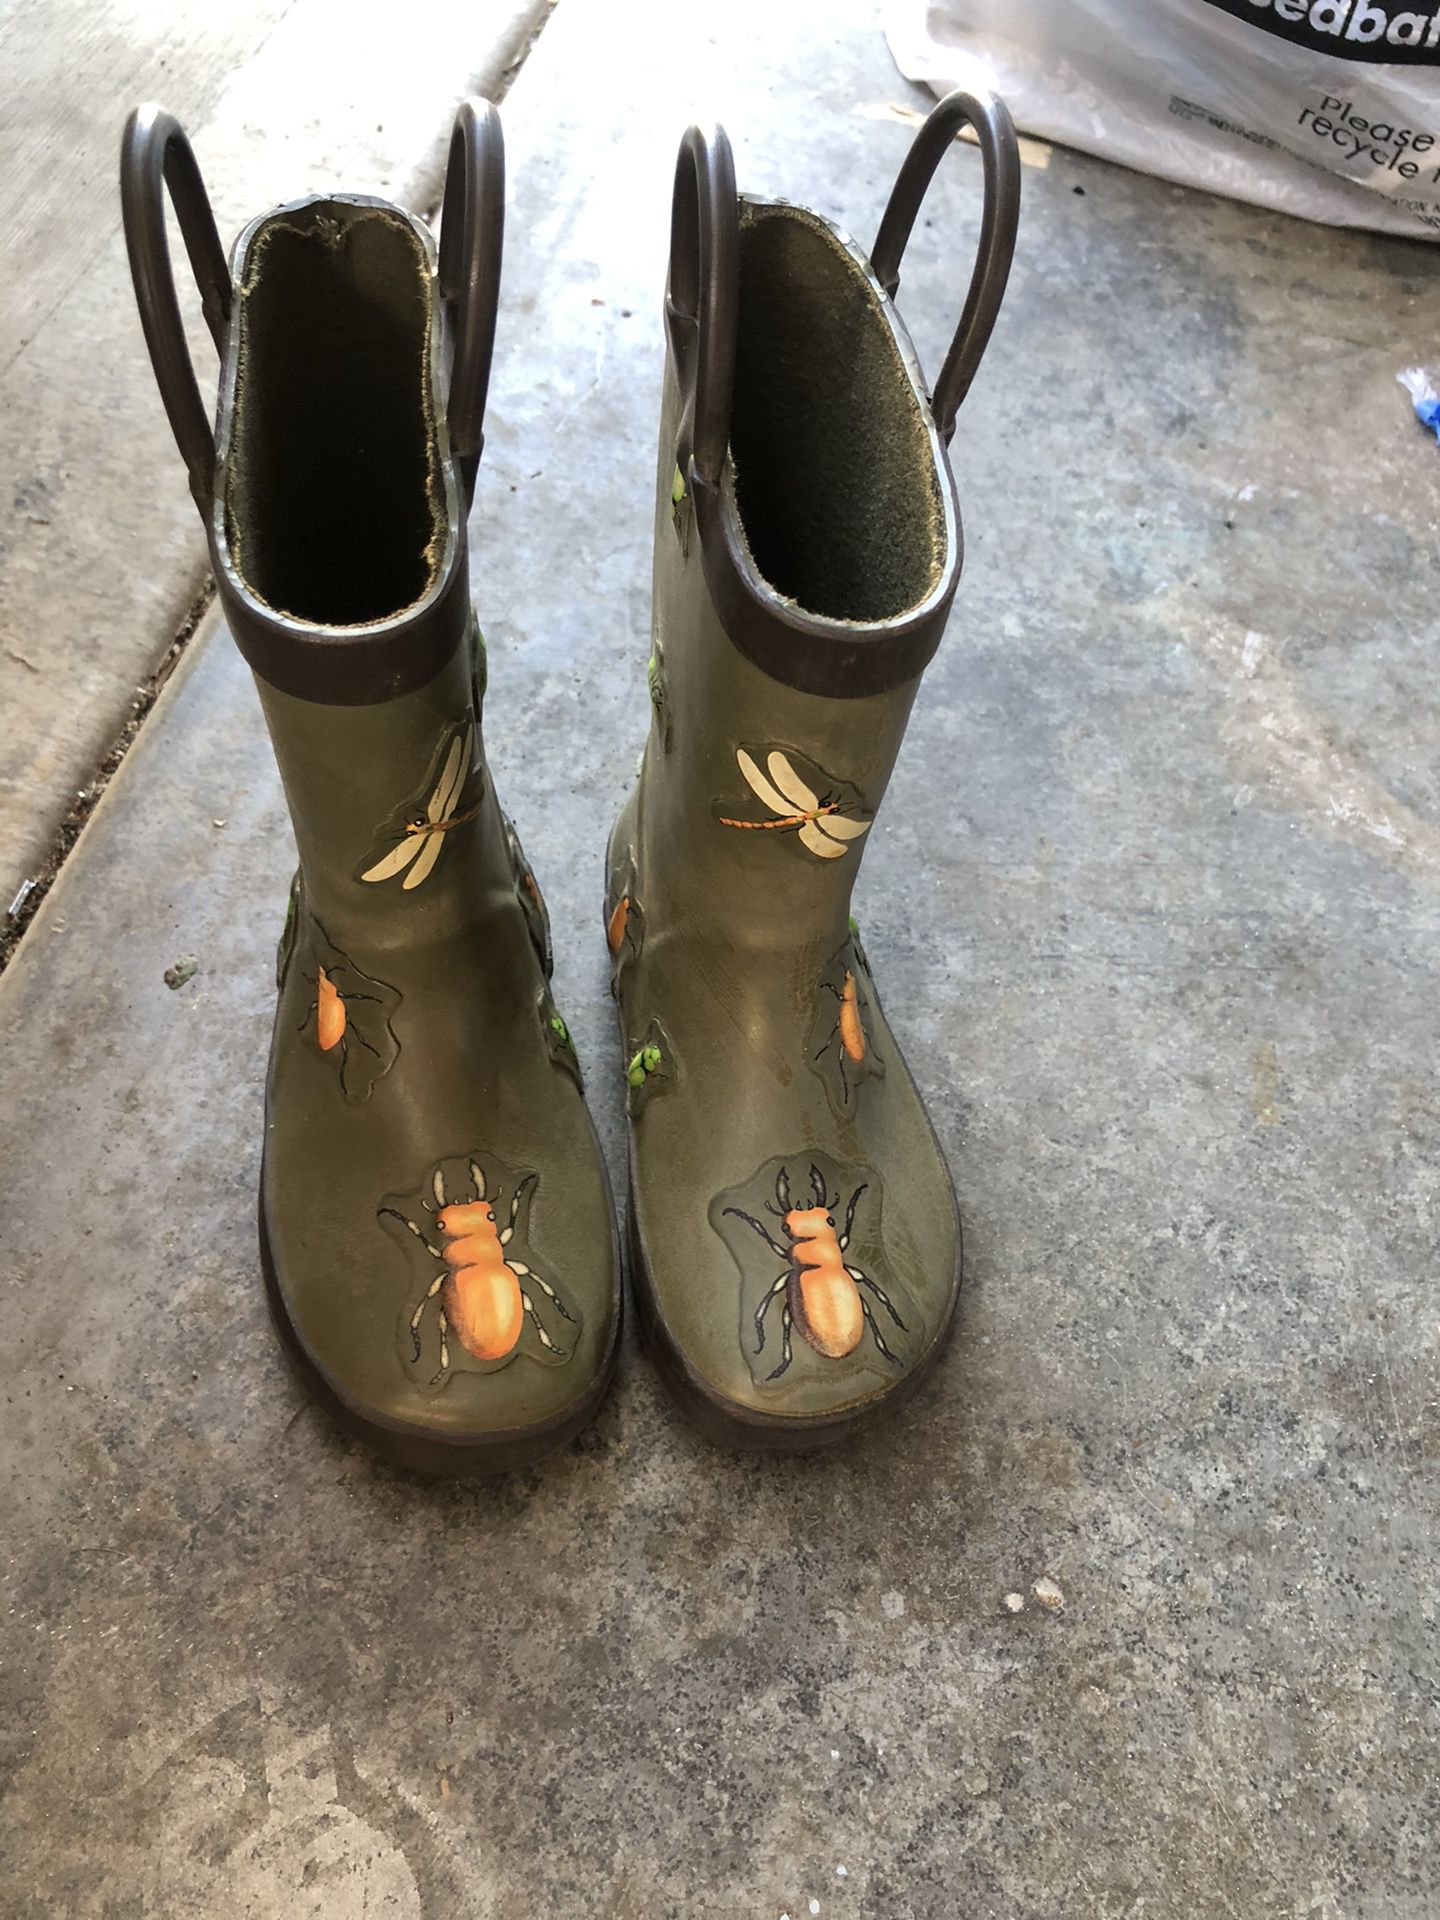 Rain boots 7-8 td